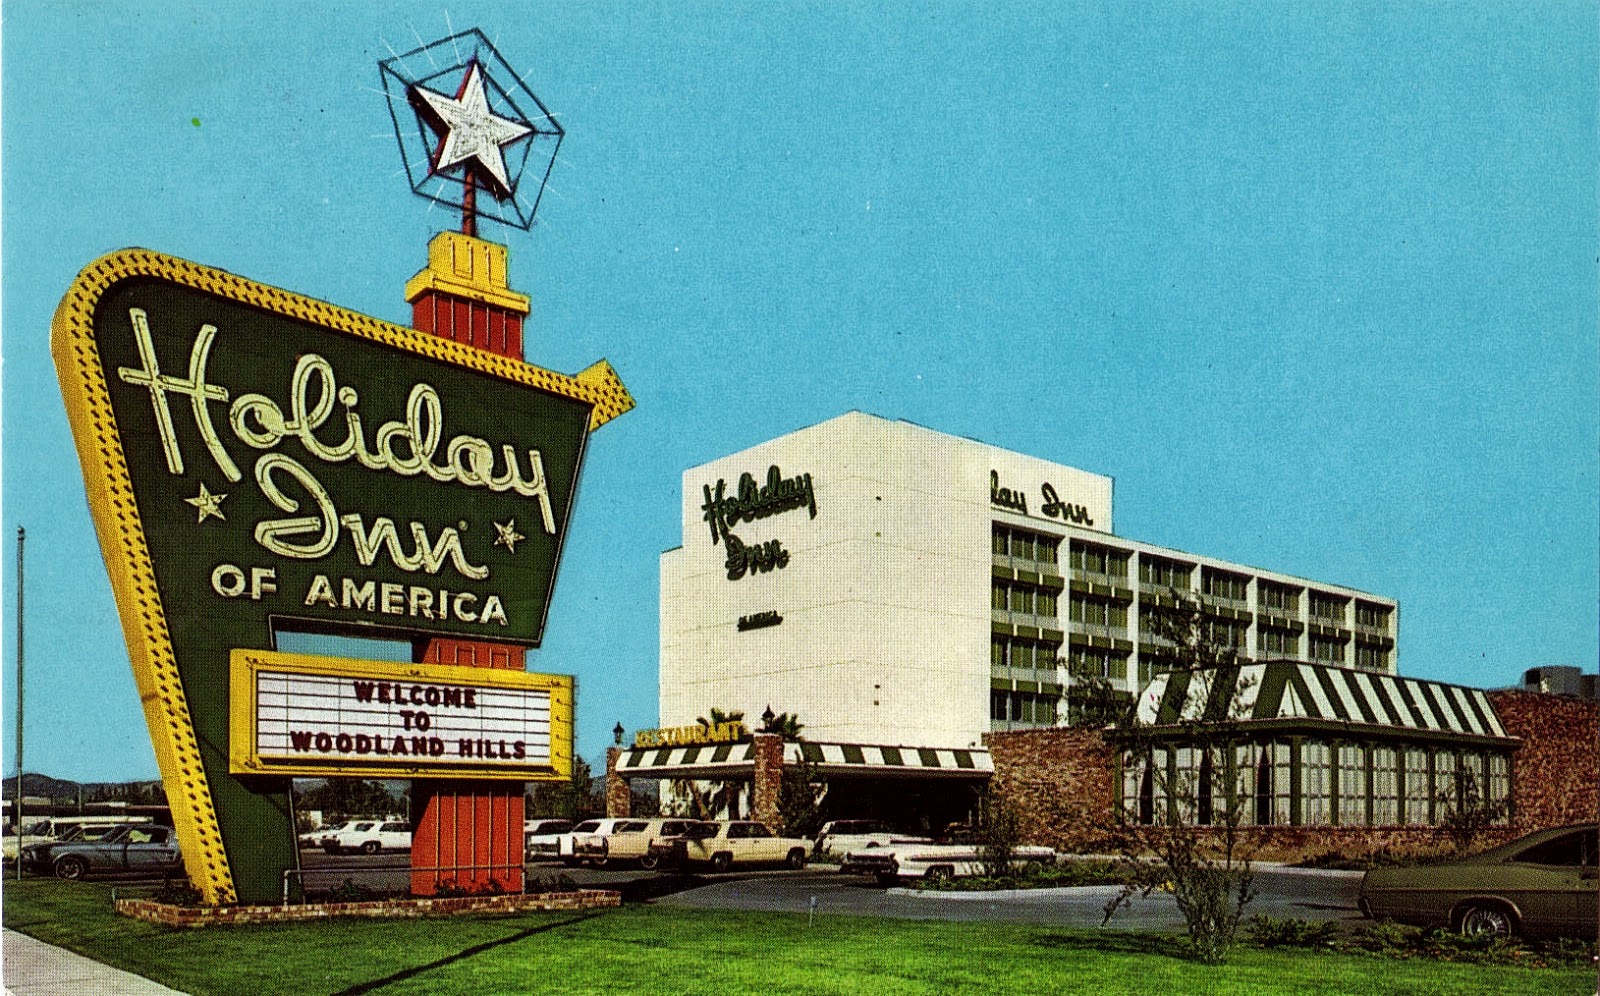 Holiday Inn in Woodland Hills Postcard | San Fernando Valley Blog